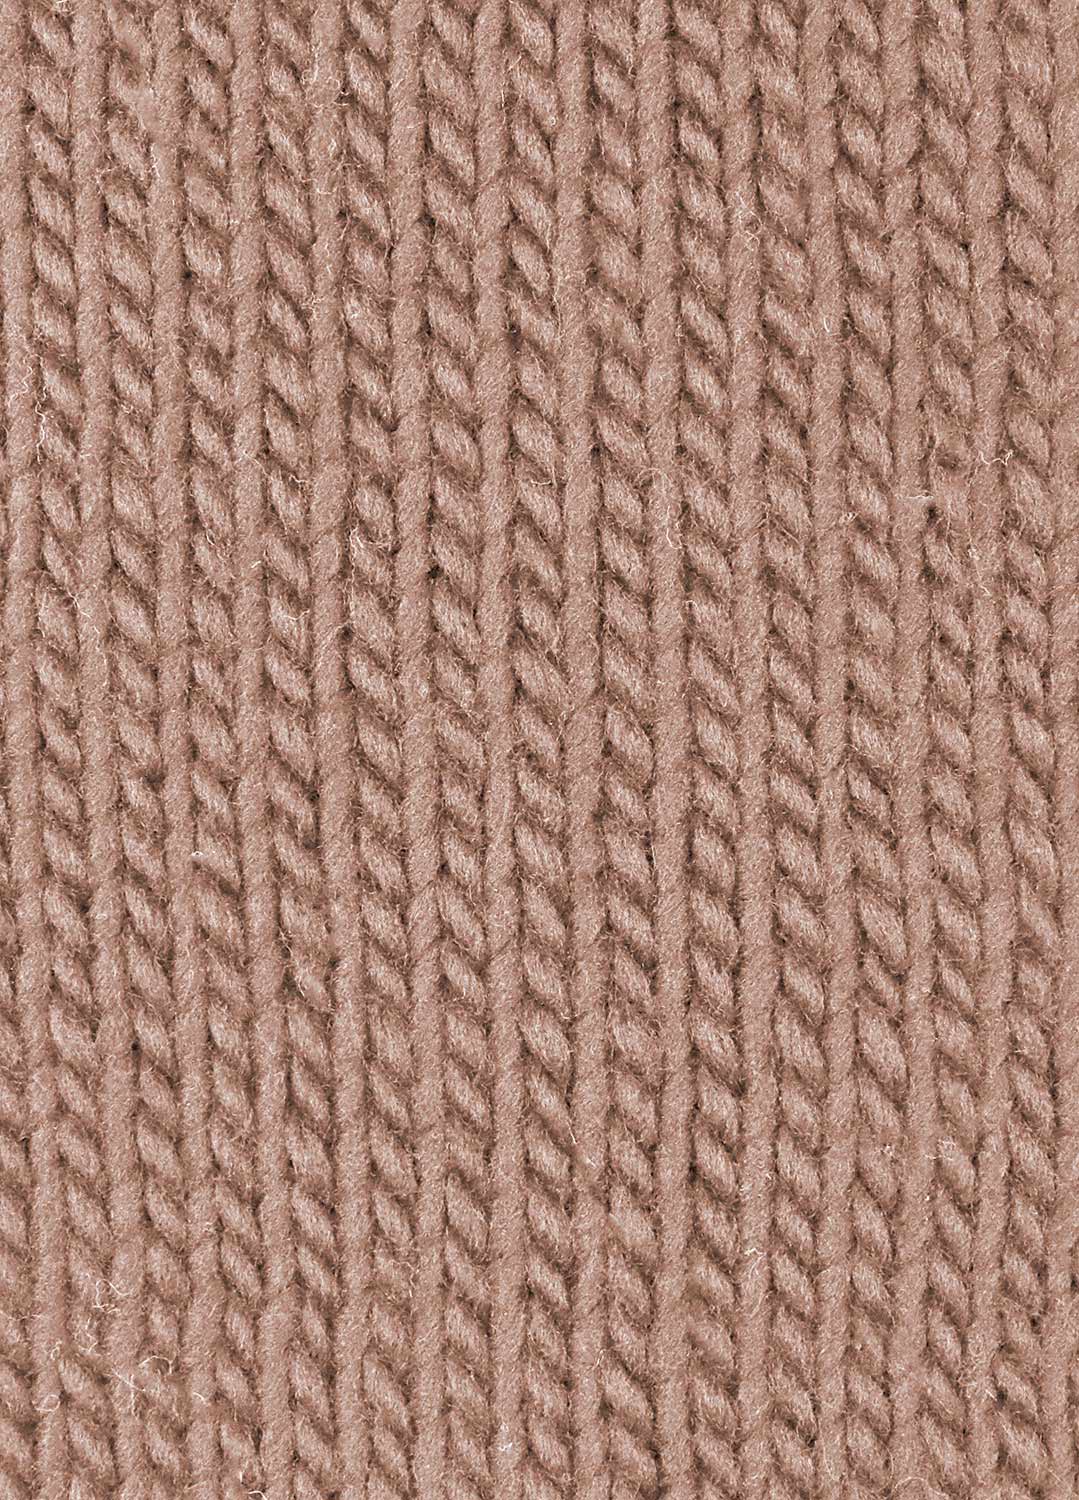 15mm Circular Beechwood Knitting Needles – weareknitters